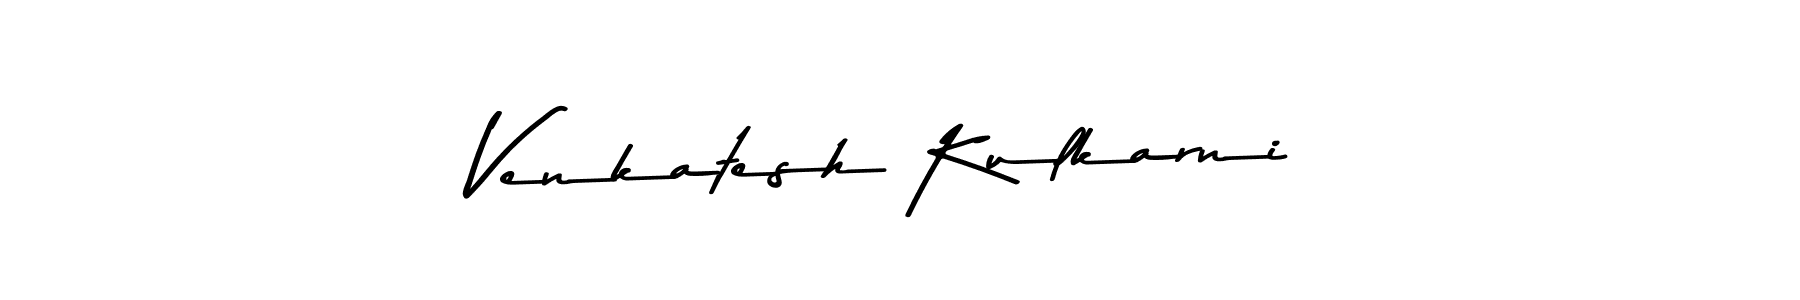 How to Draw Venkatesh Kulkarni signature style? Asem Kandis PERSONAL USE is a latest design signature styles for name Venkatesh Kulkarni. Venkatesh Kulkarni signature style 9 images and pictures png